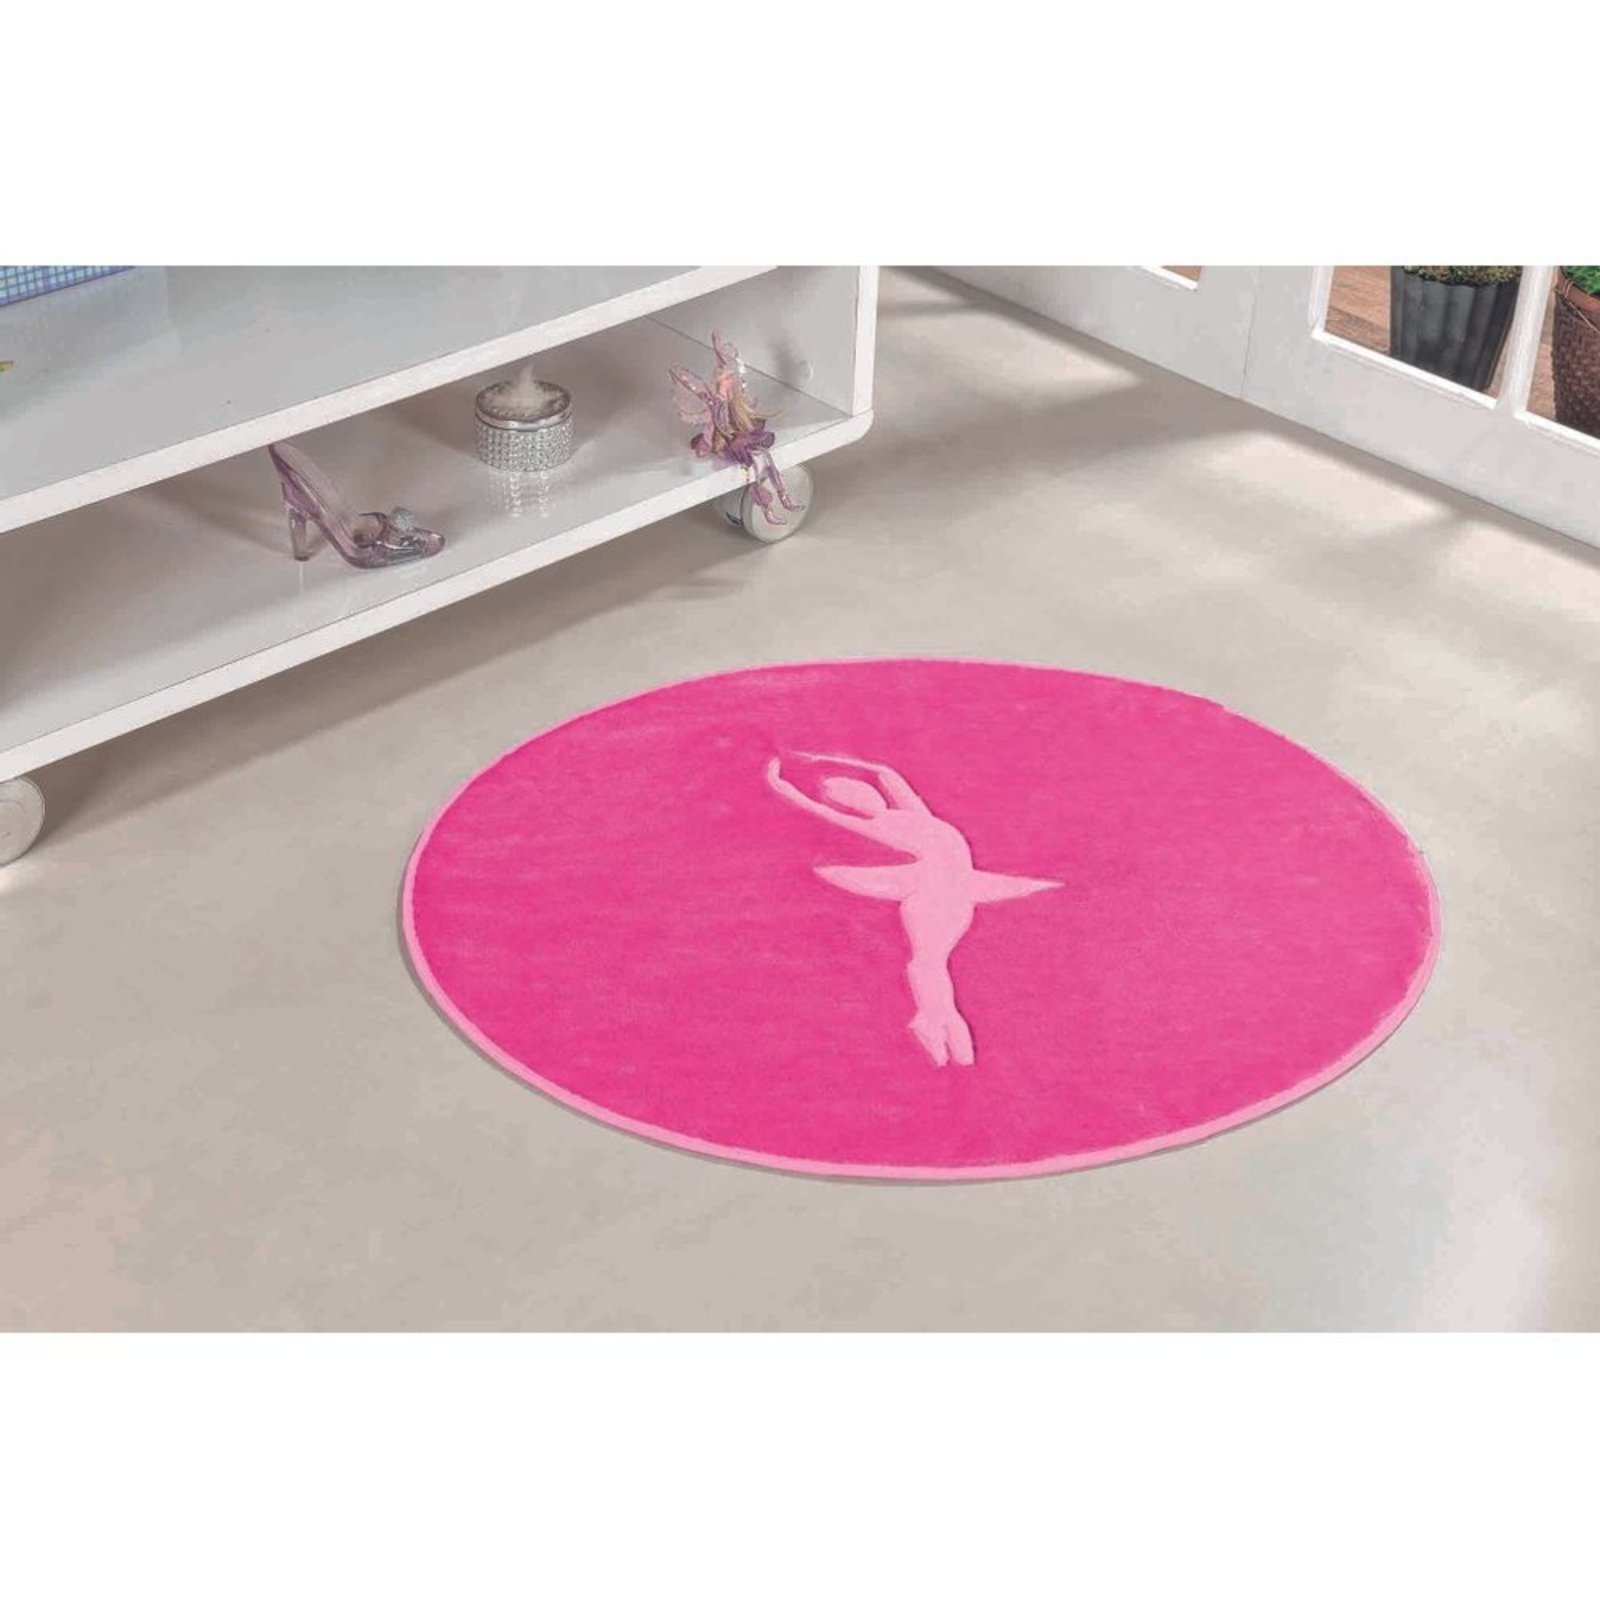 Tapete Formato com Antiderrapante Big Bailarina - 110cm x 95cm - Pink